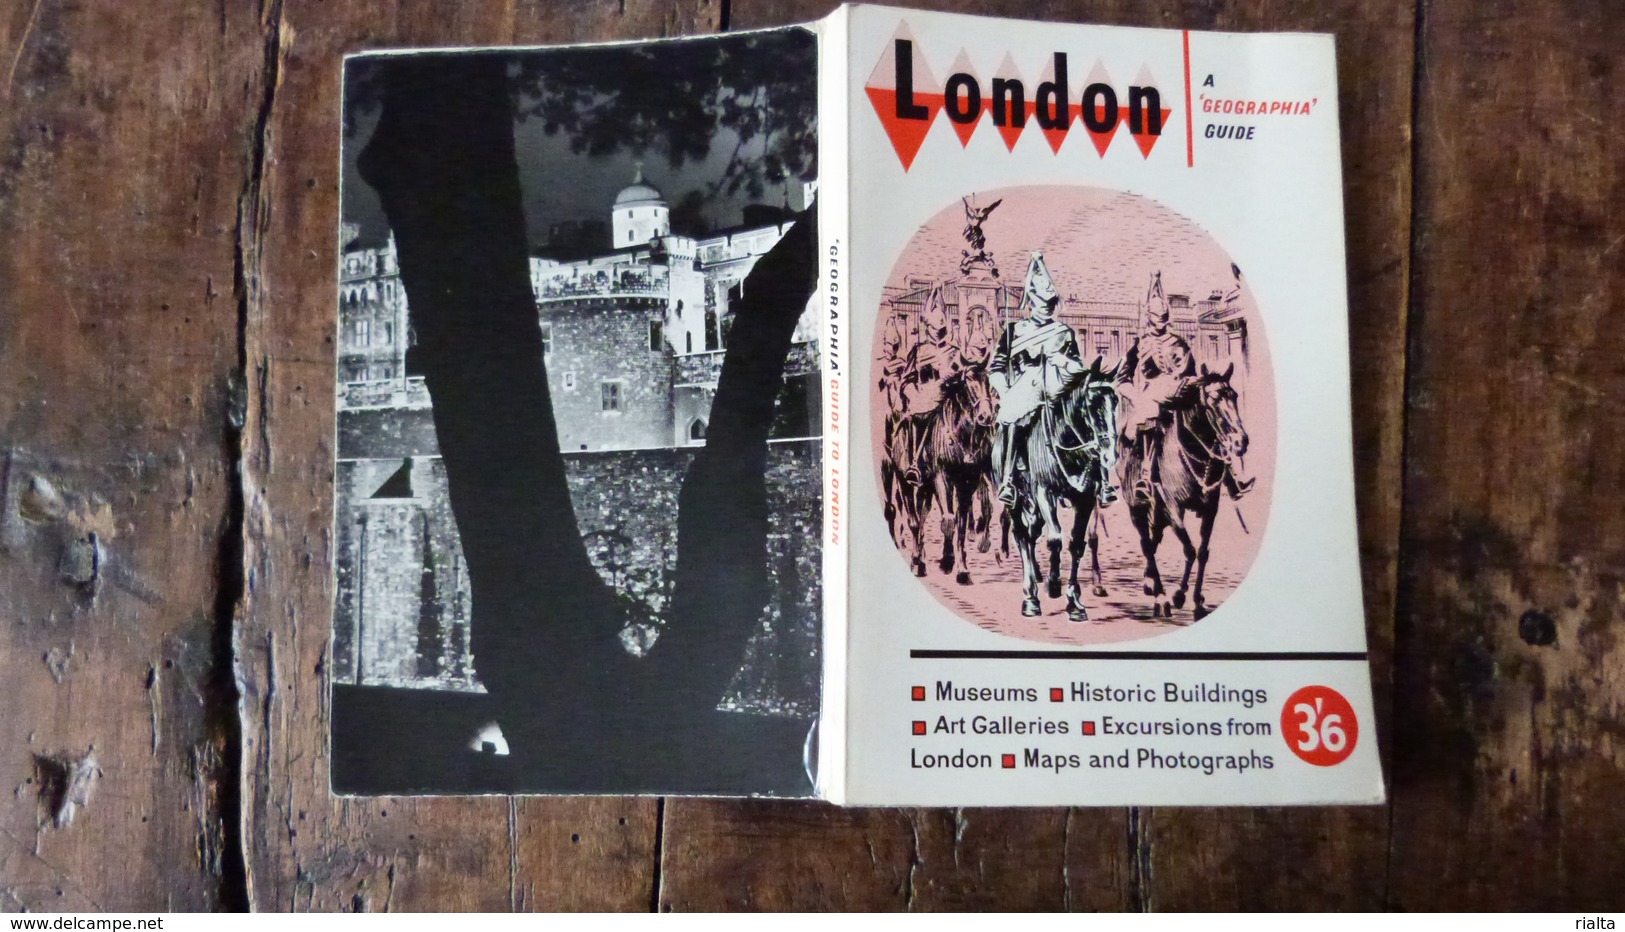 LONDON A GEOGRAPHIA GUIDE, 3'6, Années 60 - Europa